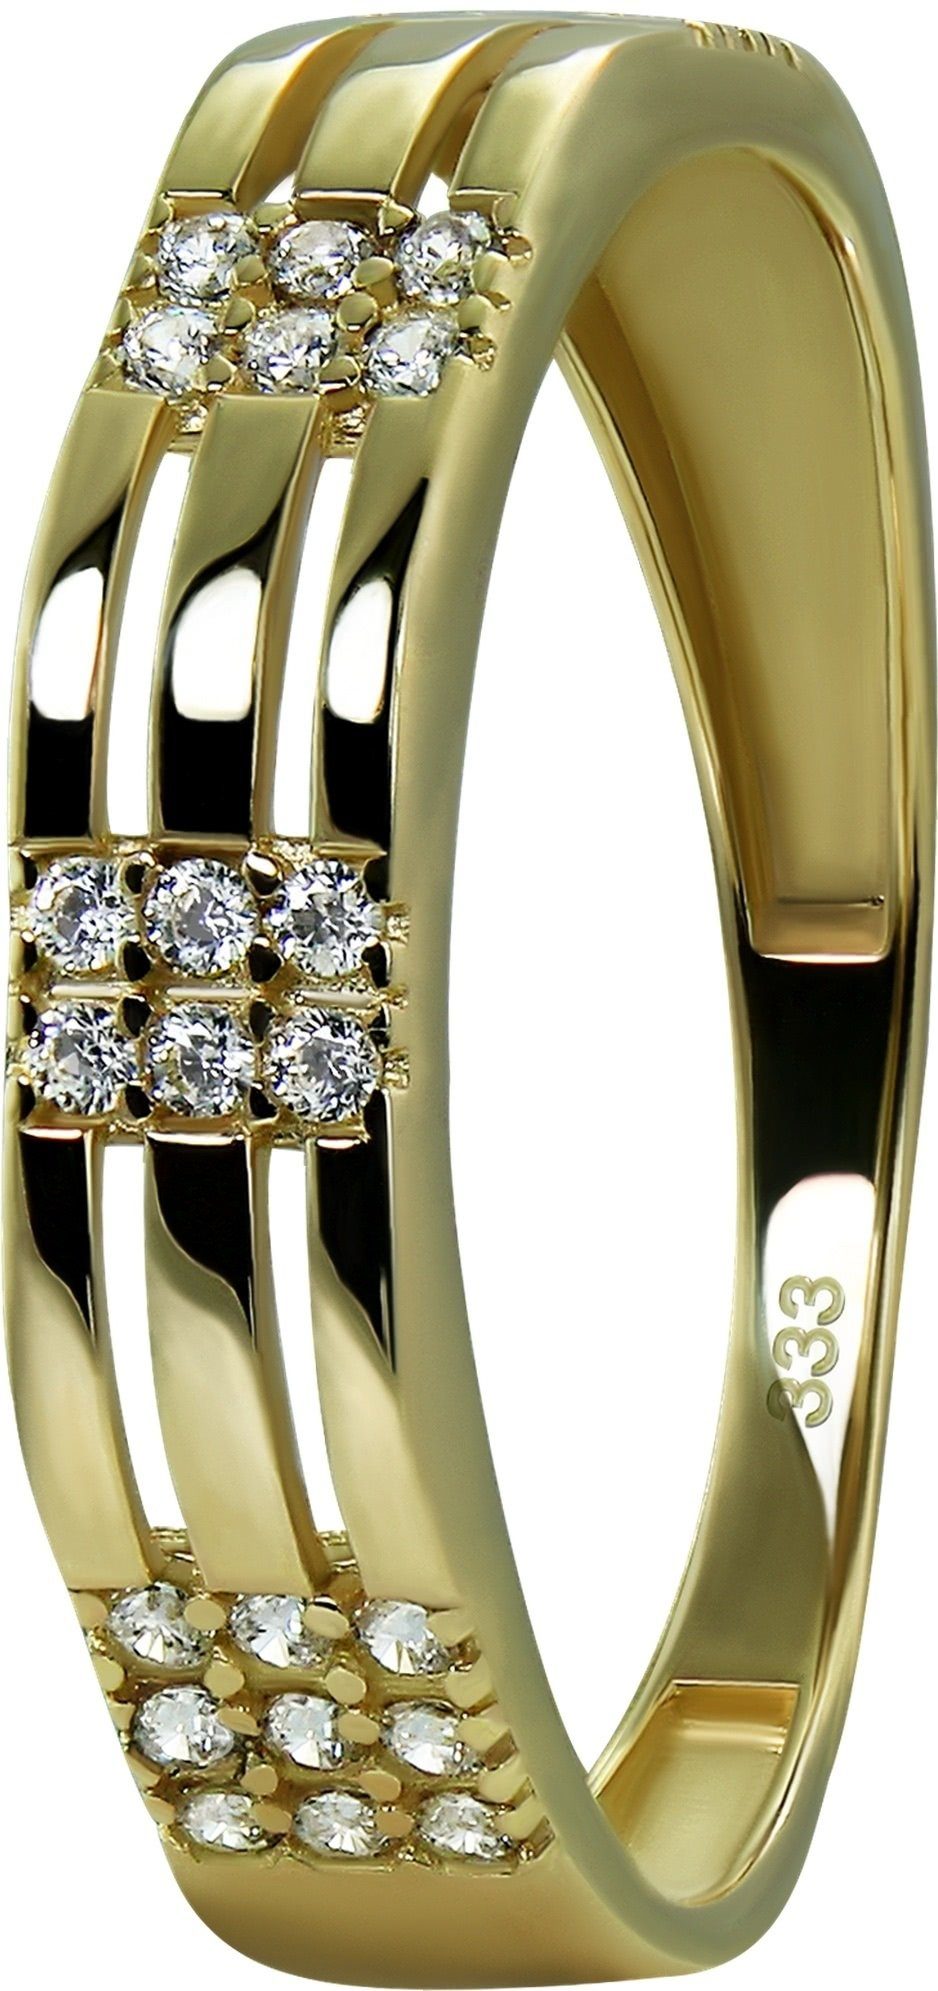 GoldDream Goldring GoldDream Gold Ring Sparkle Gr.60 (Fingerring), Damen Ring Sparkle 333 Gelbgold - 8 Karat, Farbe: gold, weiß